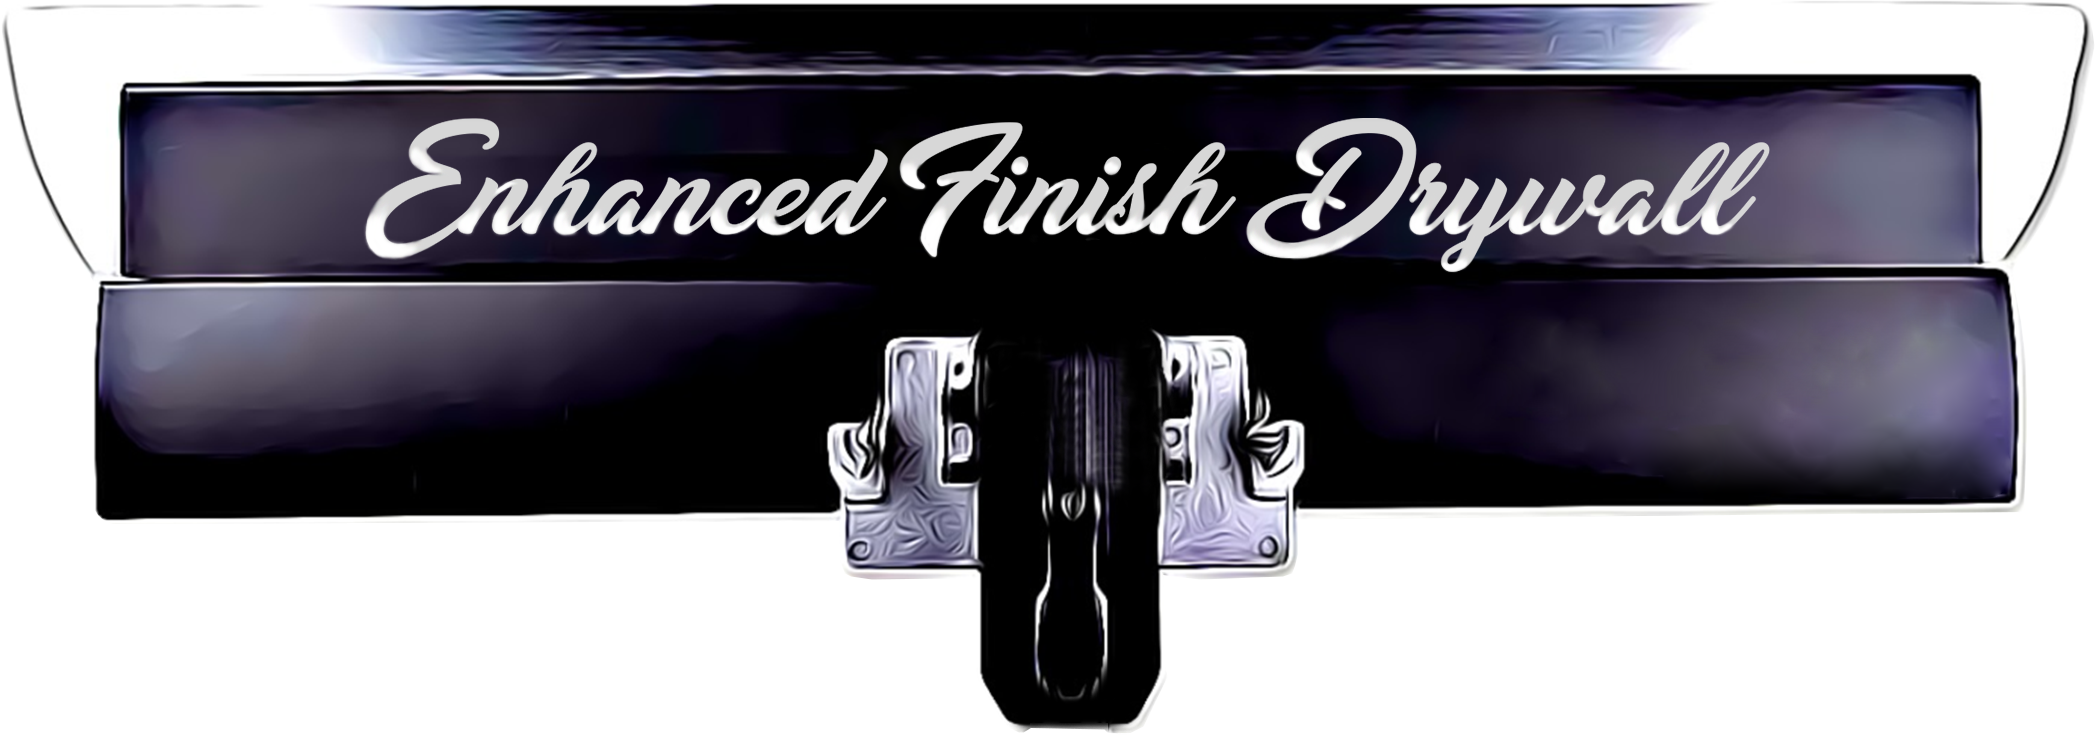 Enhanced Finish Drywall Logo